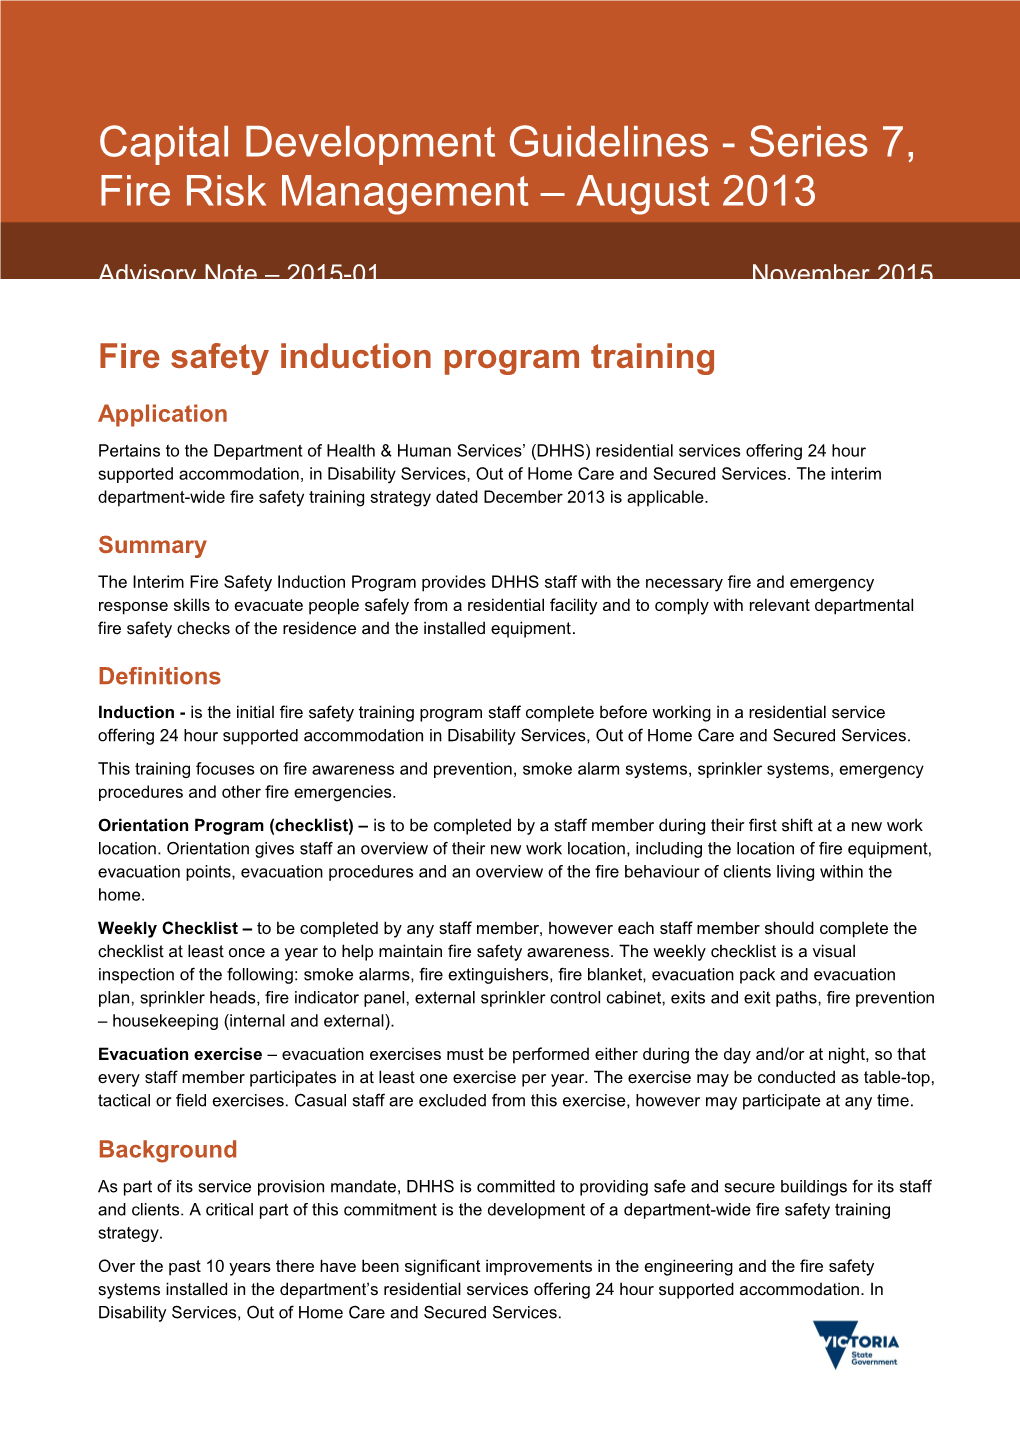 Fire Safety Induction Program Training